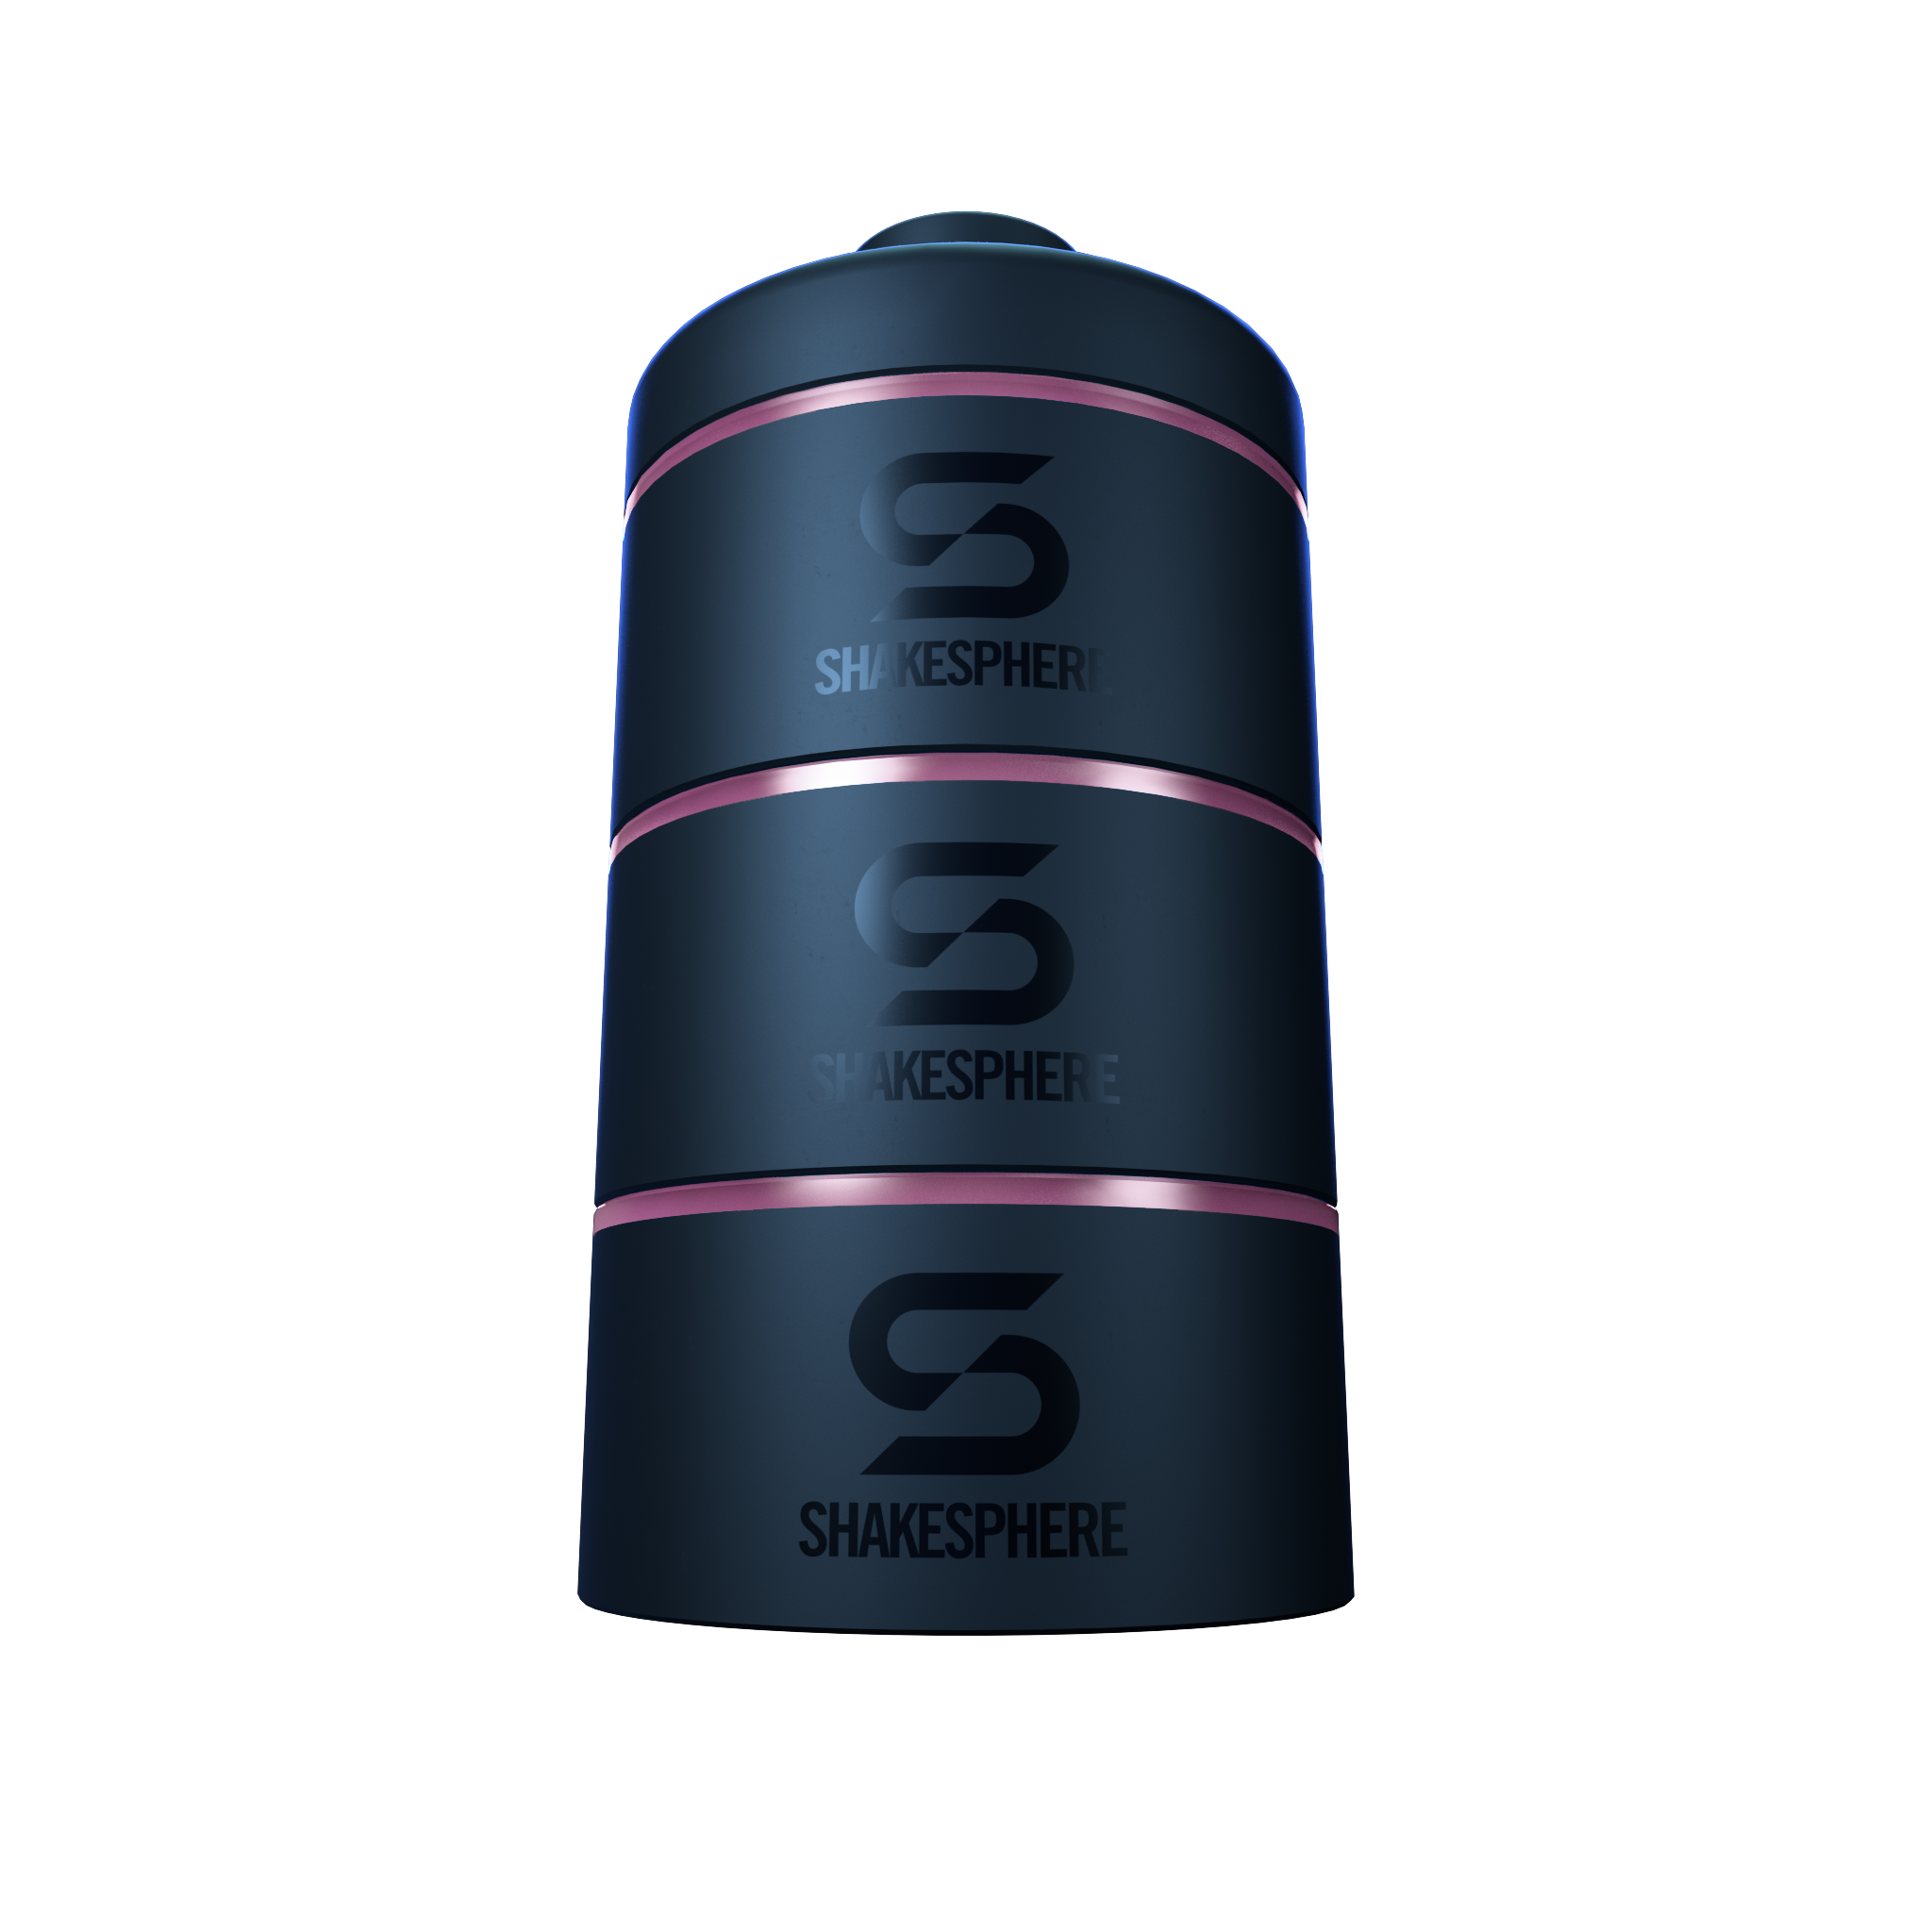 ShakeSphere 三合一營養品分裝盒 迷霧黑 透明粉色隔層85g / 3oz